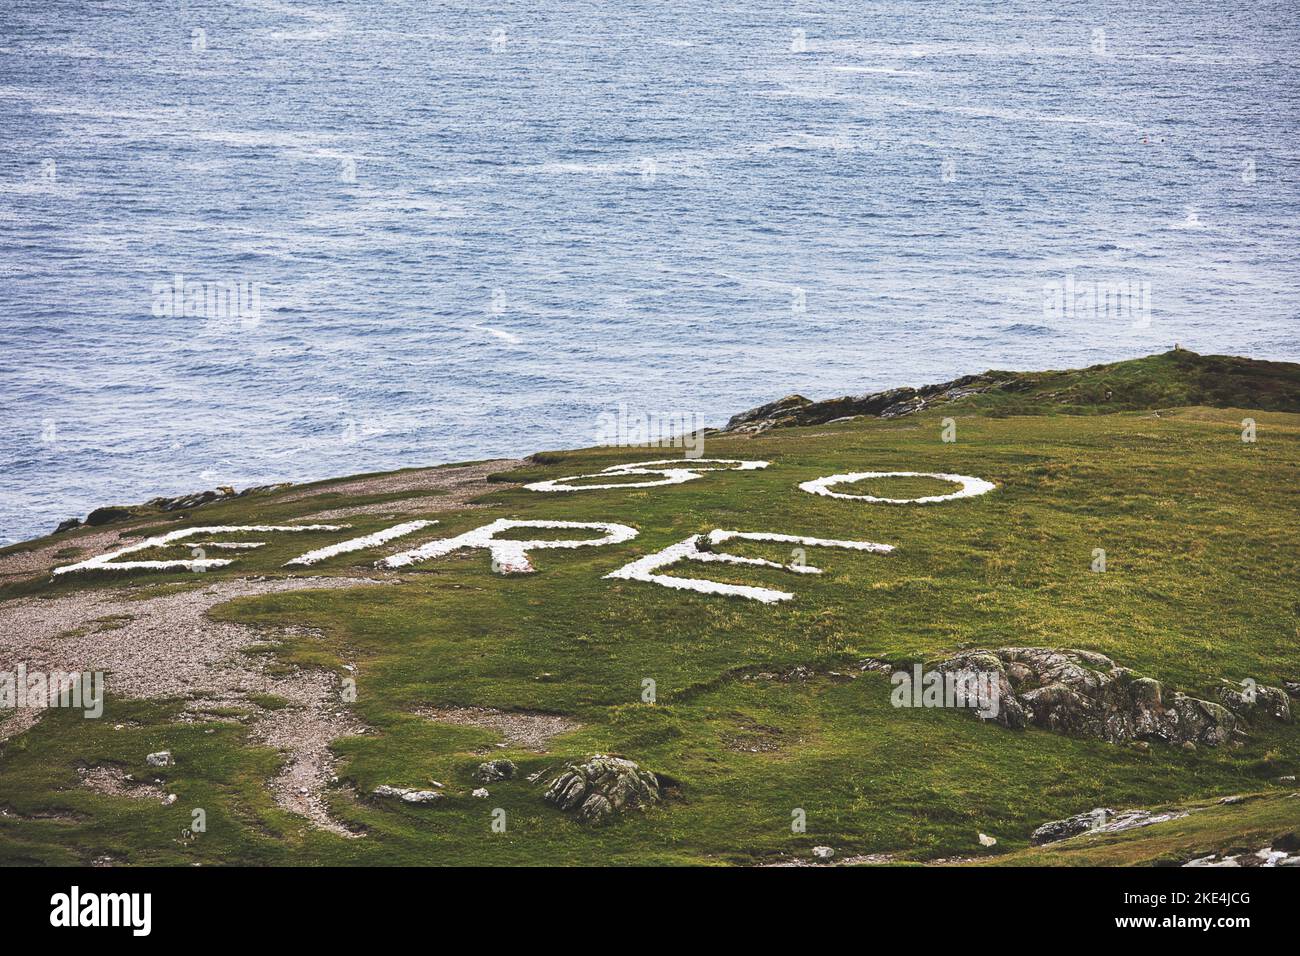 Eire 80 sign on the headland at Malin Head, Inishowen Peninsula, County Donegal, Republic of Ireland Stock Photo